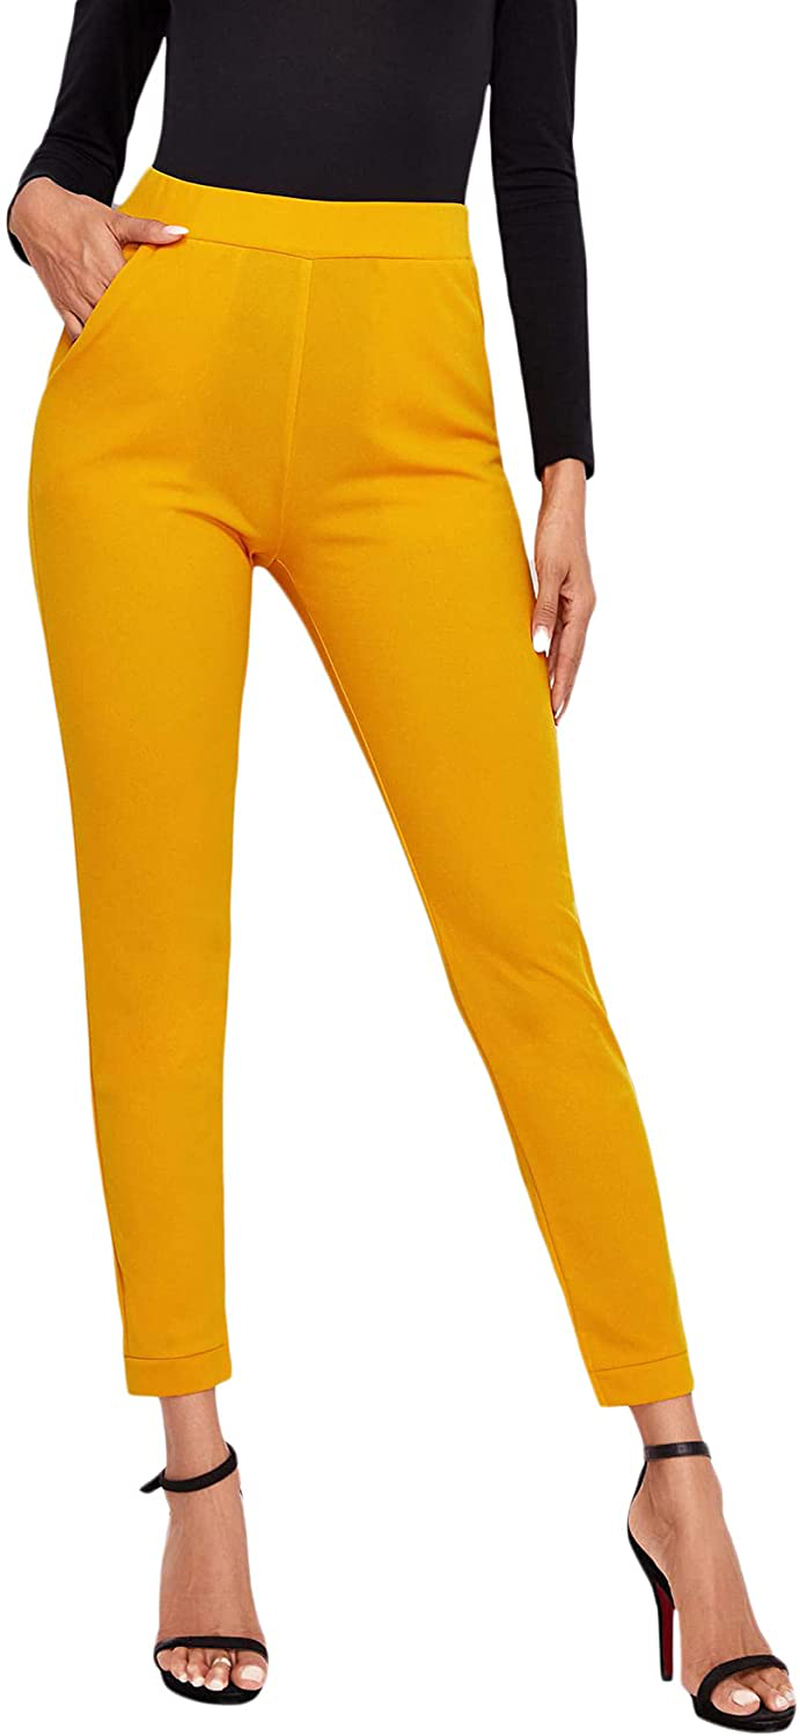 SOLY HUX Women's Pocket Side Elastic High Waist Elegant Trousers Skinny Pants